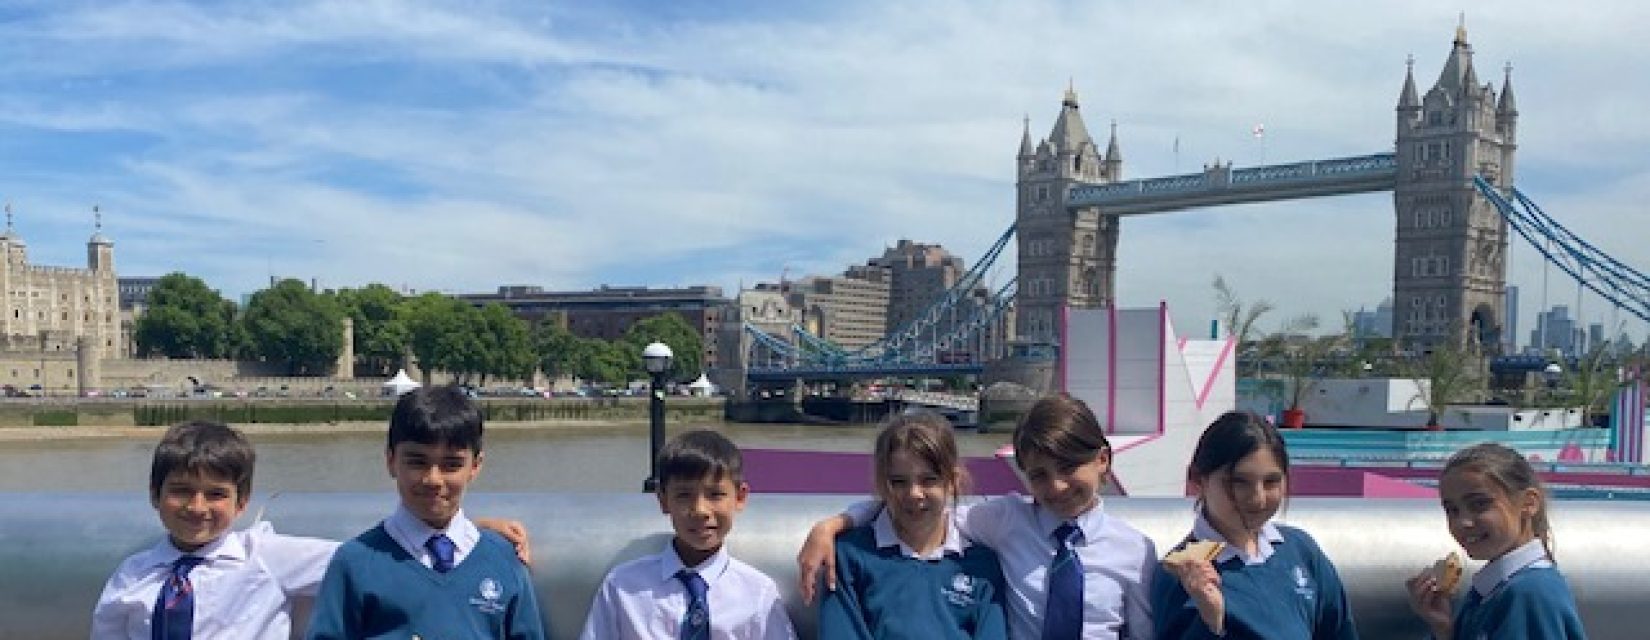 children standing infront of Tower Bridge